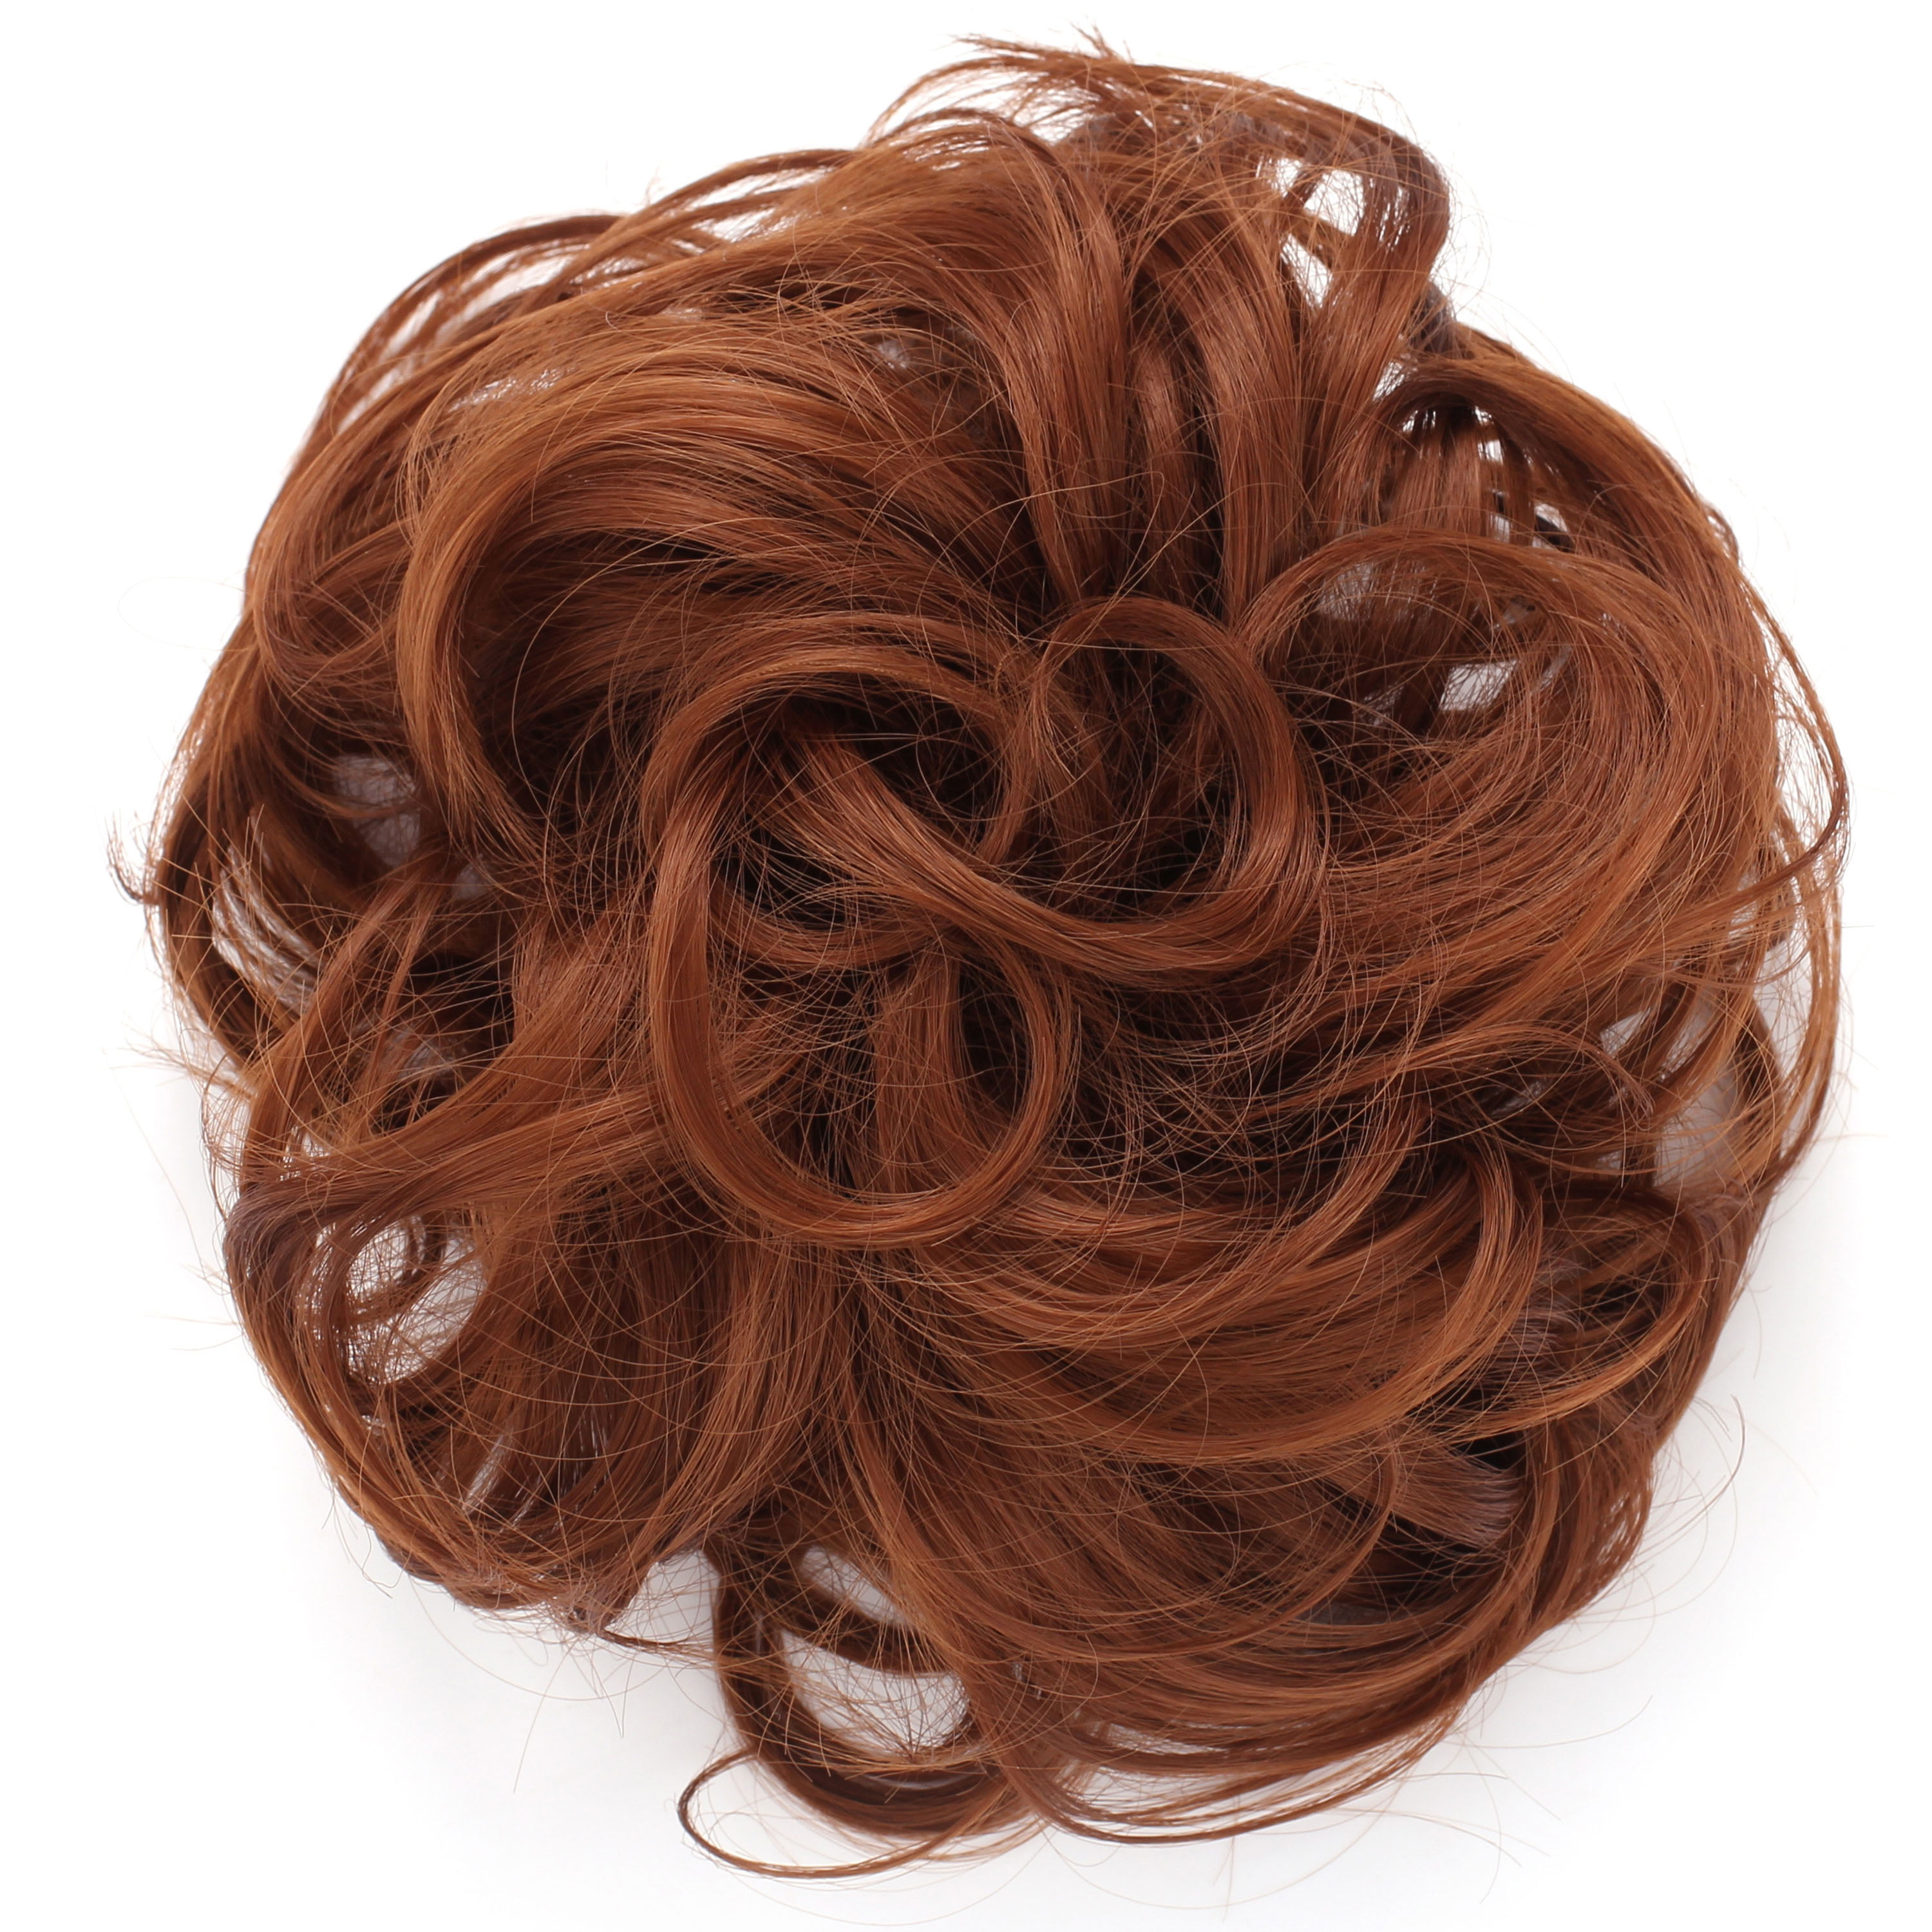 OneDor Synthetic Messy Hair Bun Extension Chignon Hair Piece (30